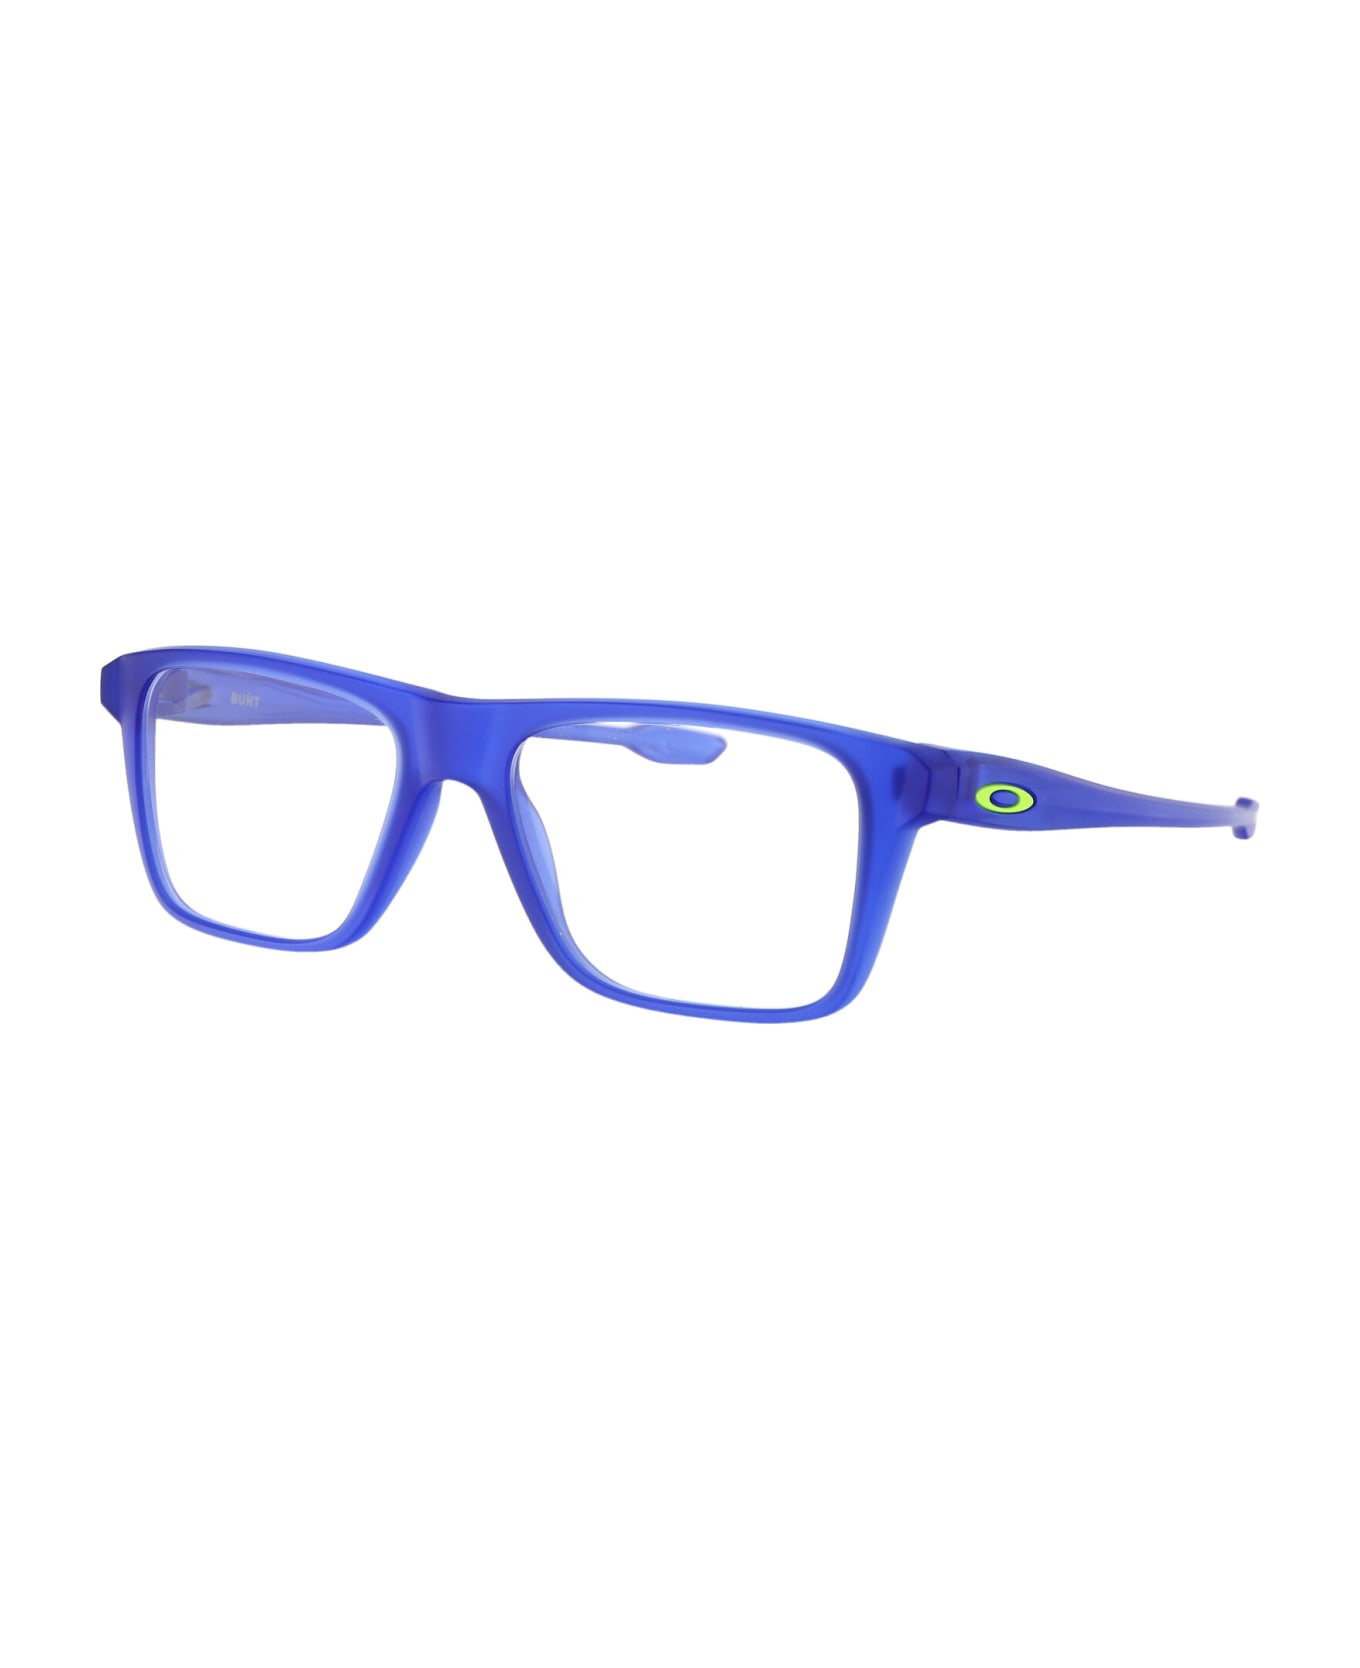 Oakley Bunt Glasses - 802604 MATTE SEA GLASS DEMO LENS アイウェア